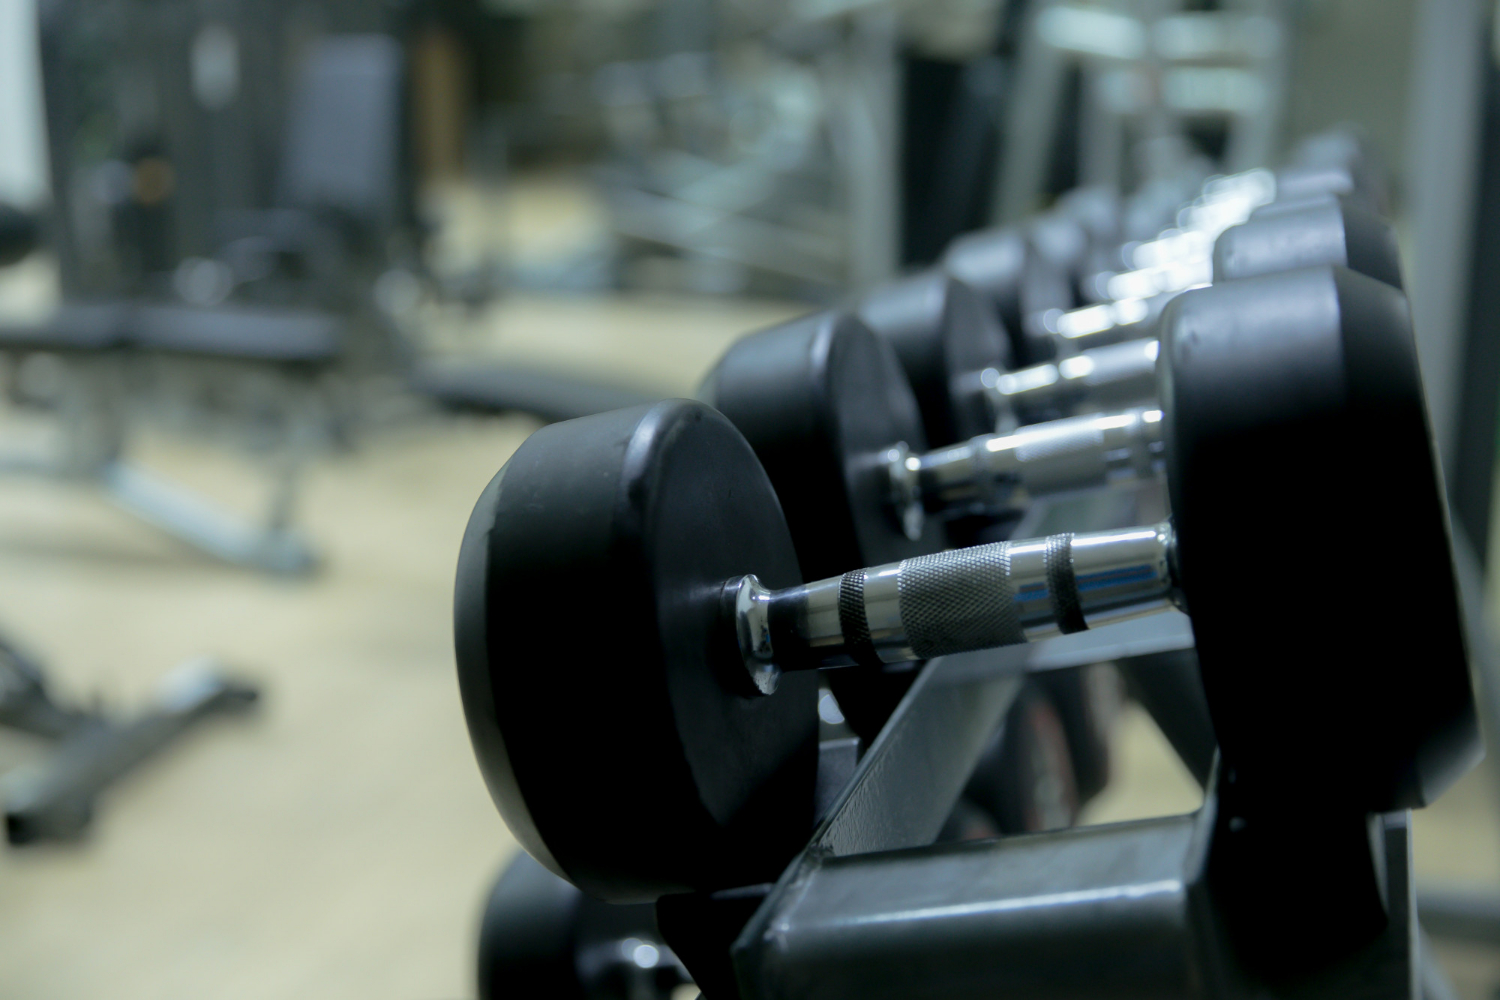 fitness equipment in bodybuilding gym room